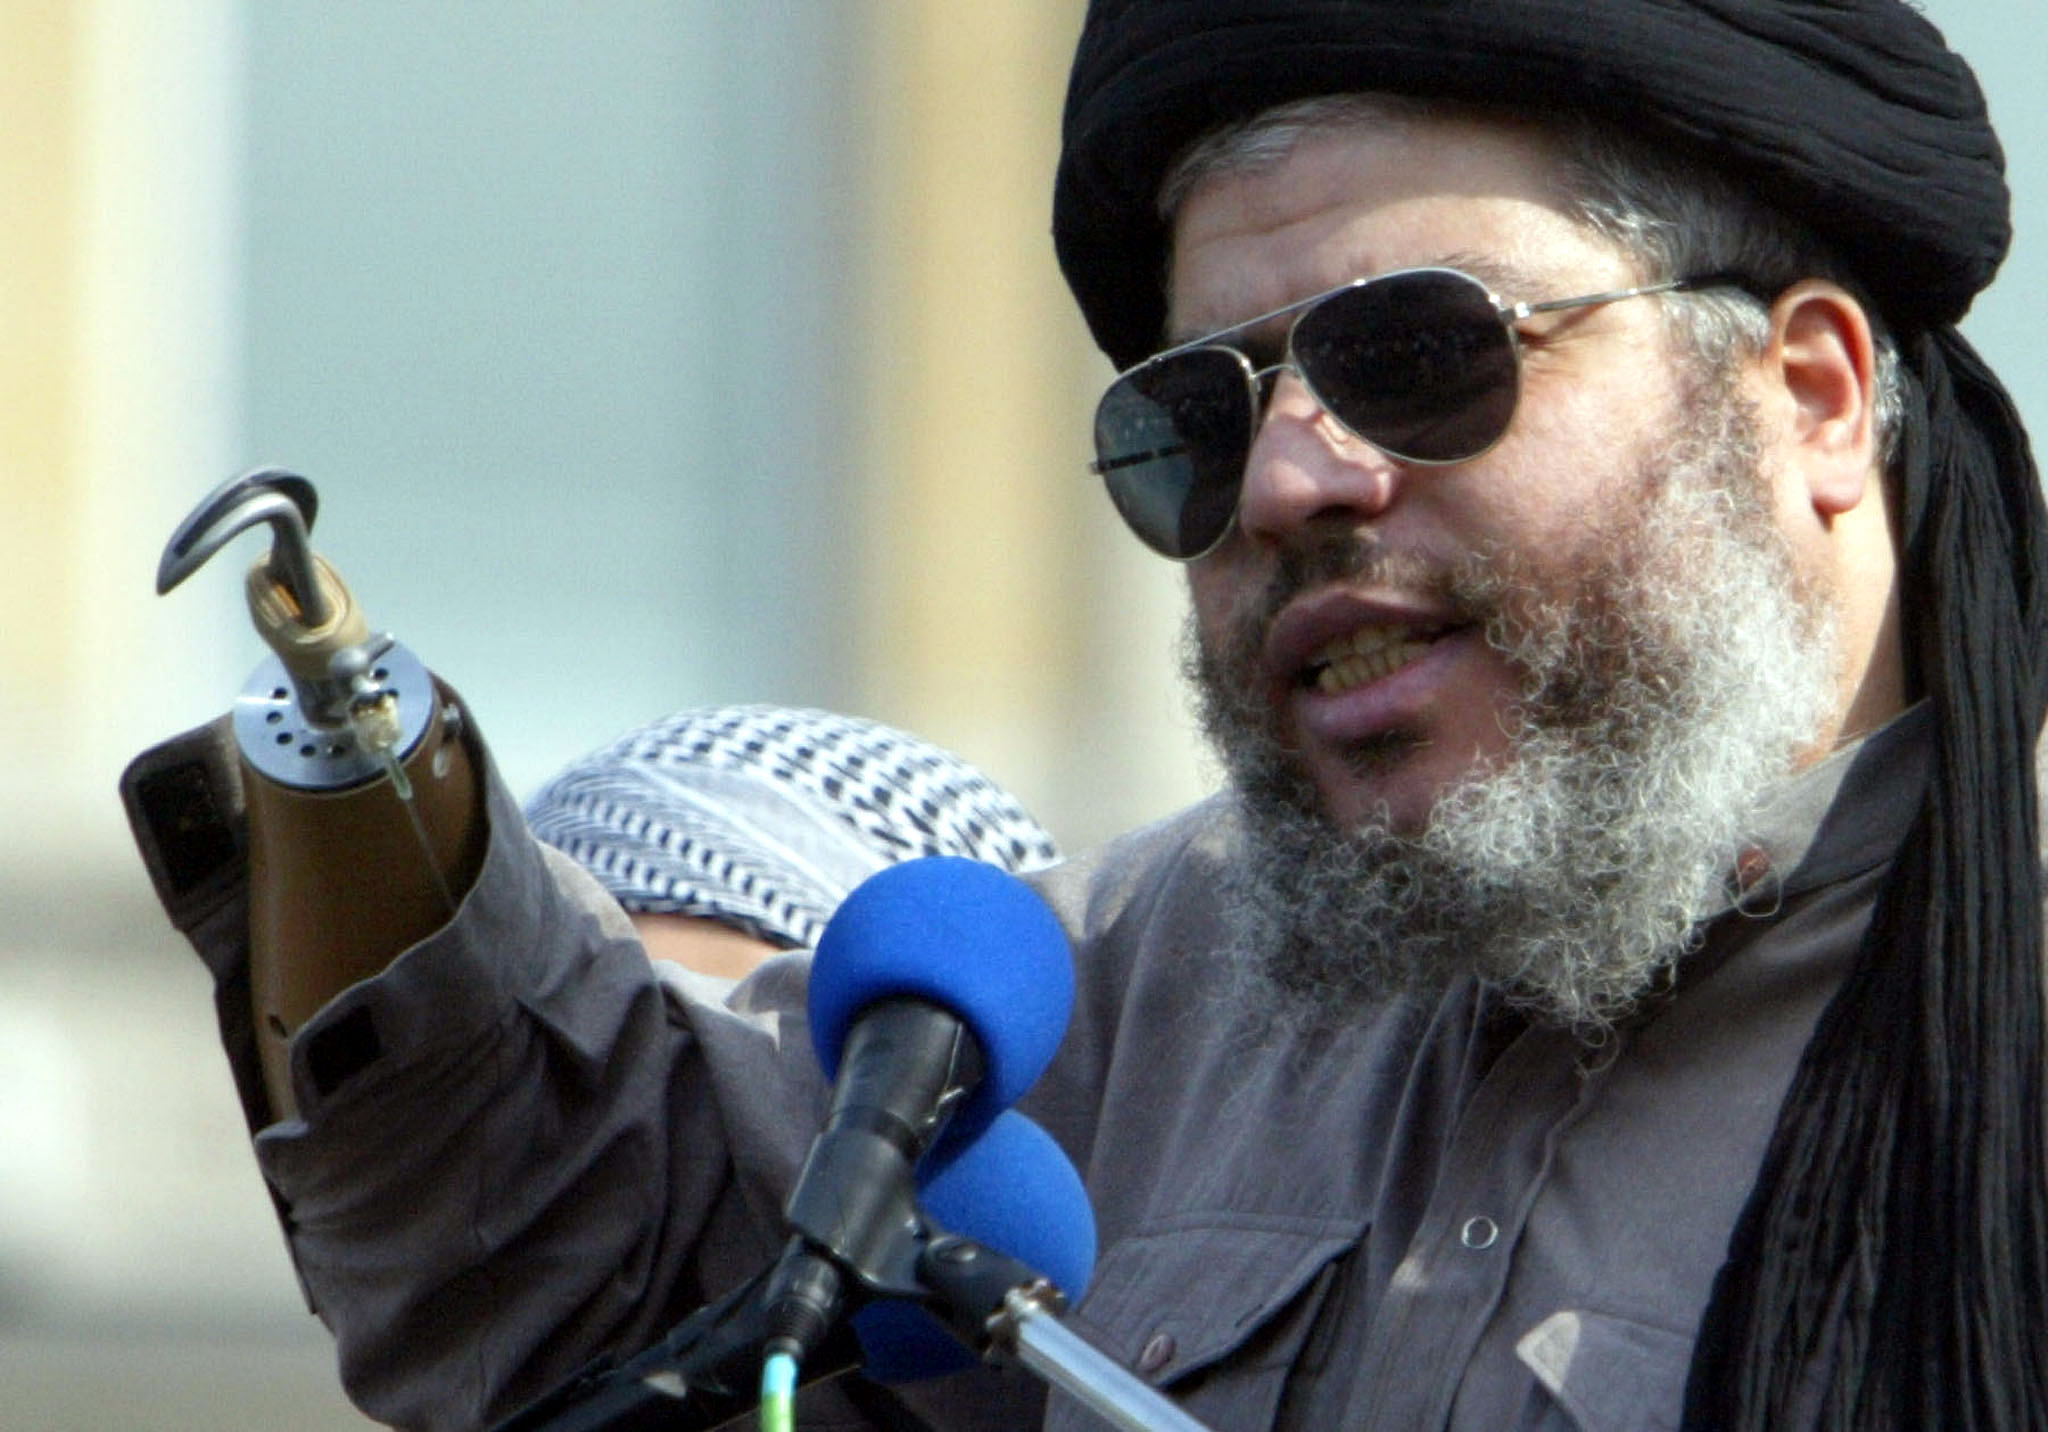 MUSLIM CLERIC SHEIKH ABU HAMZA AL-MASRI ADDRESSES SIXTH ANNUAL RALLYFOR ISLAM IN LONDON.